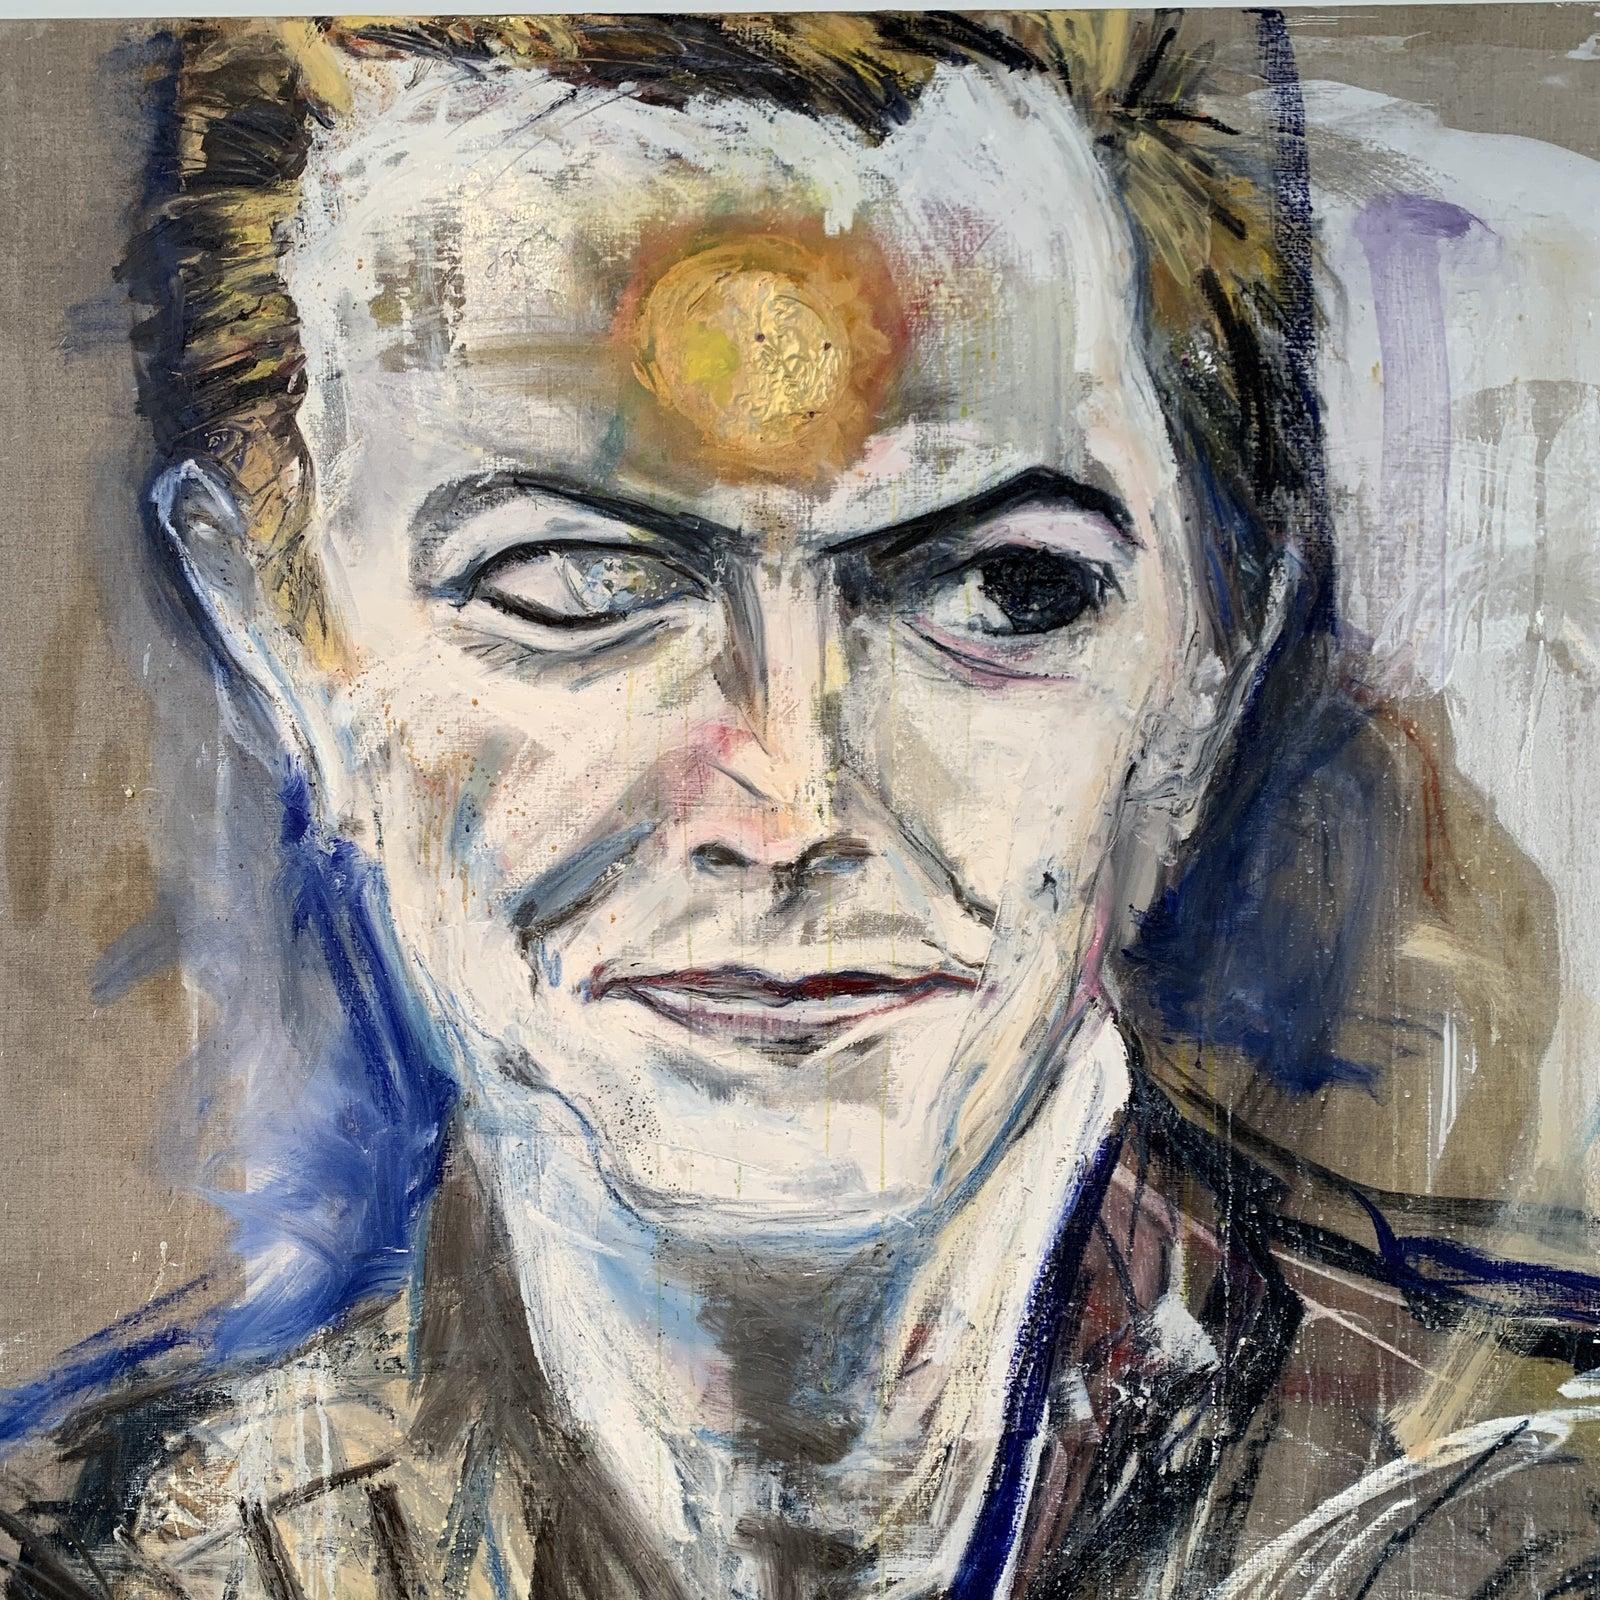 David Bowie sur lin  - Contemporain Mixed Media Art par Karen Schwartz